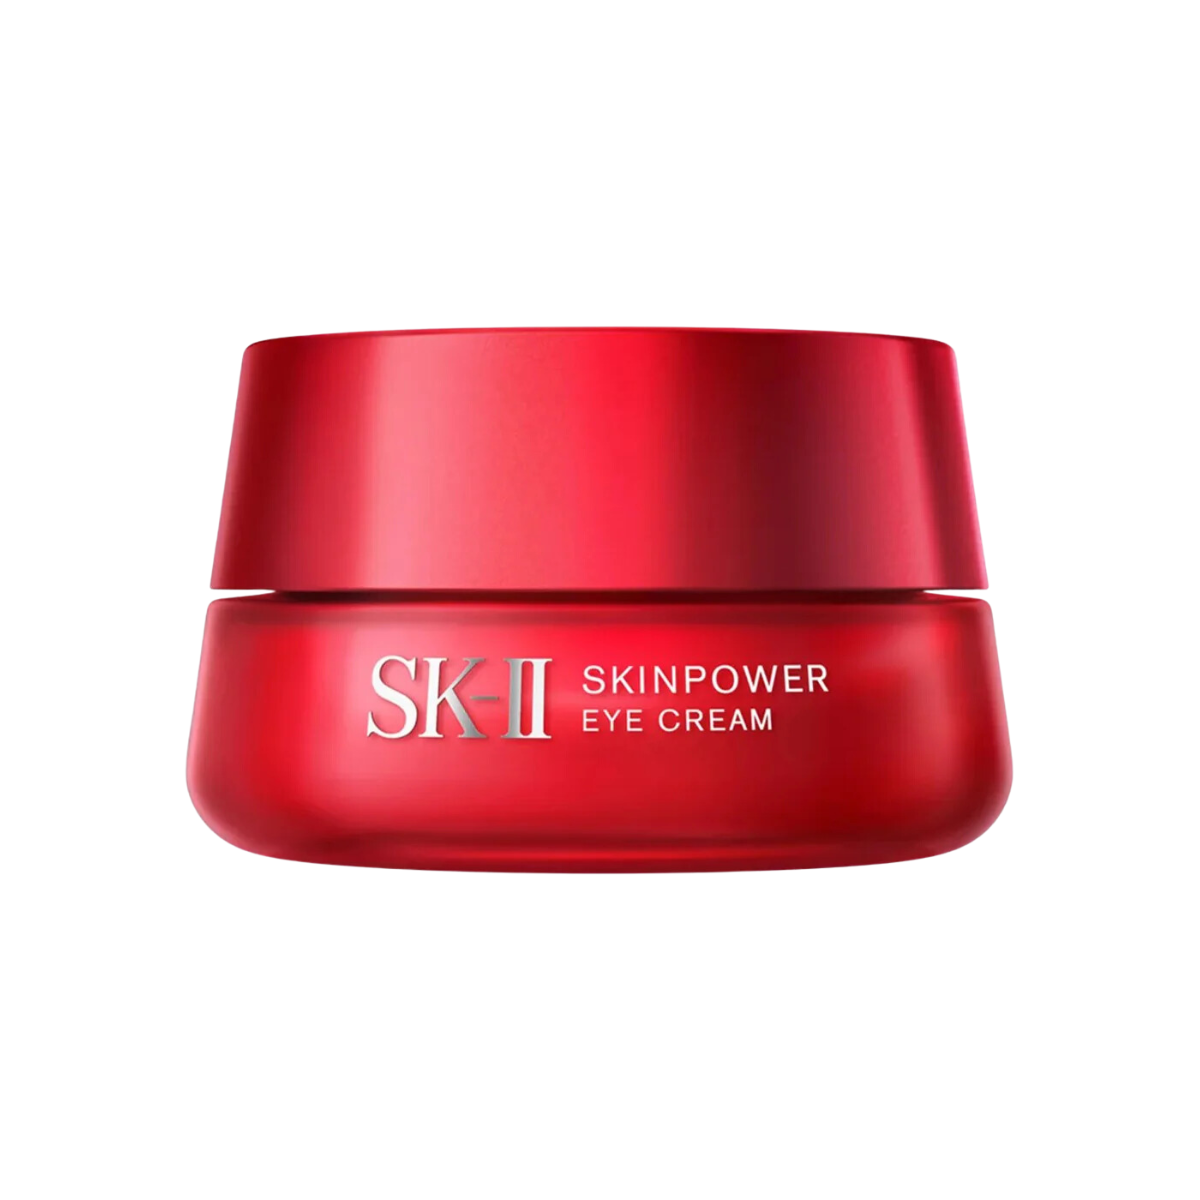 SK-II SKINPOWER Eye Cream 15g